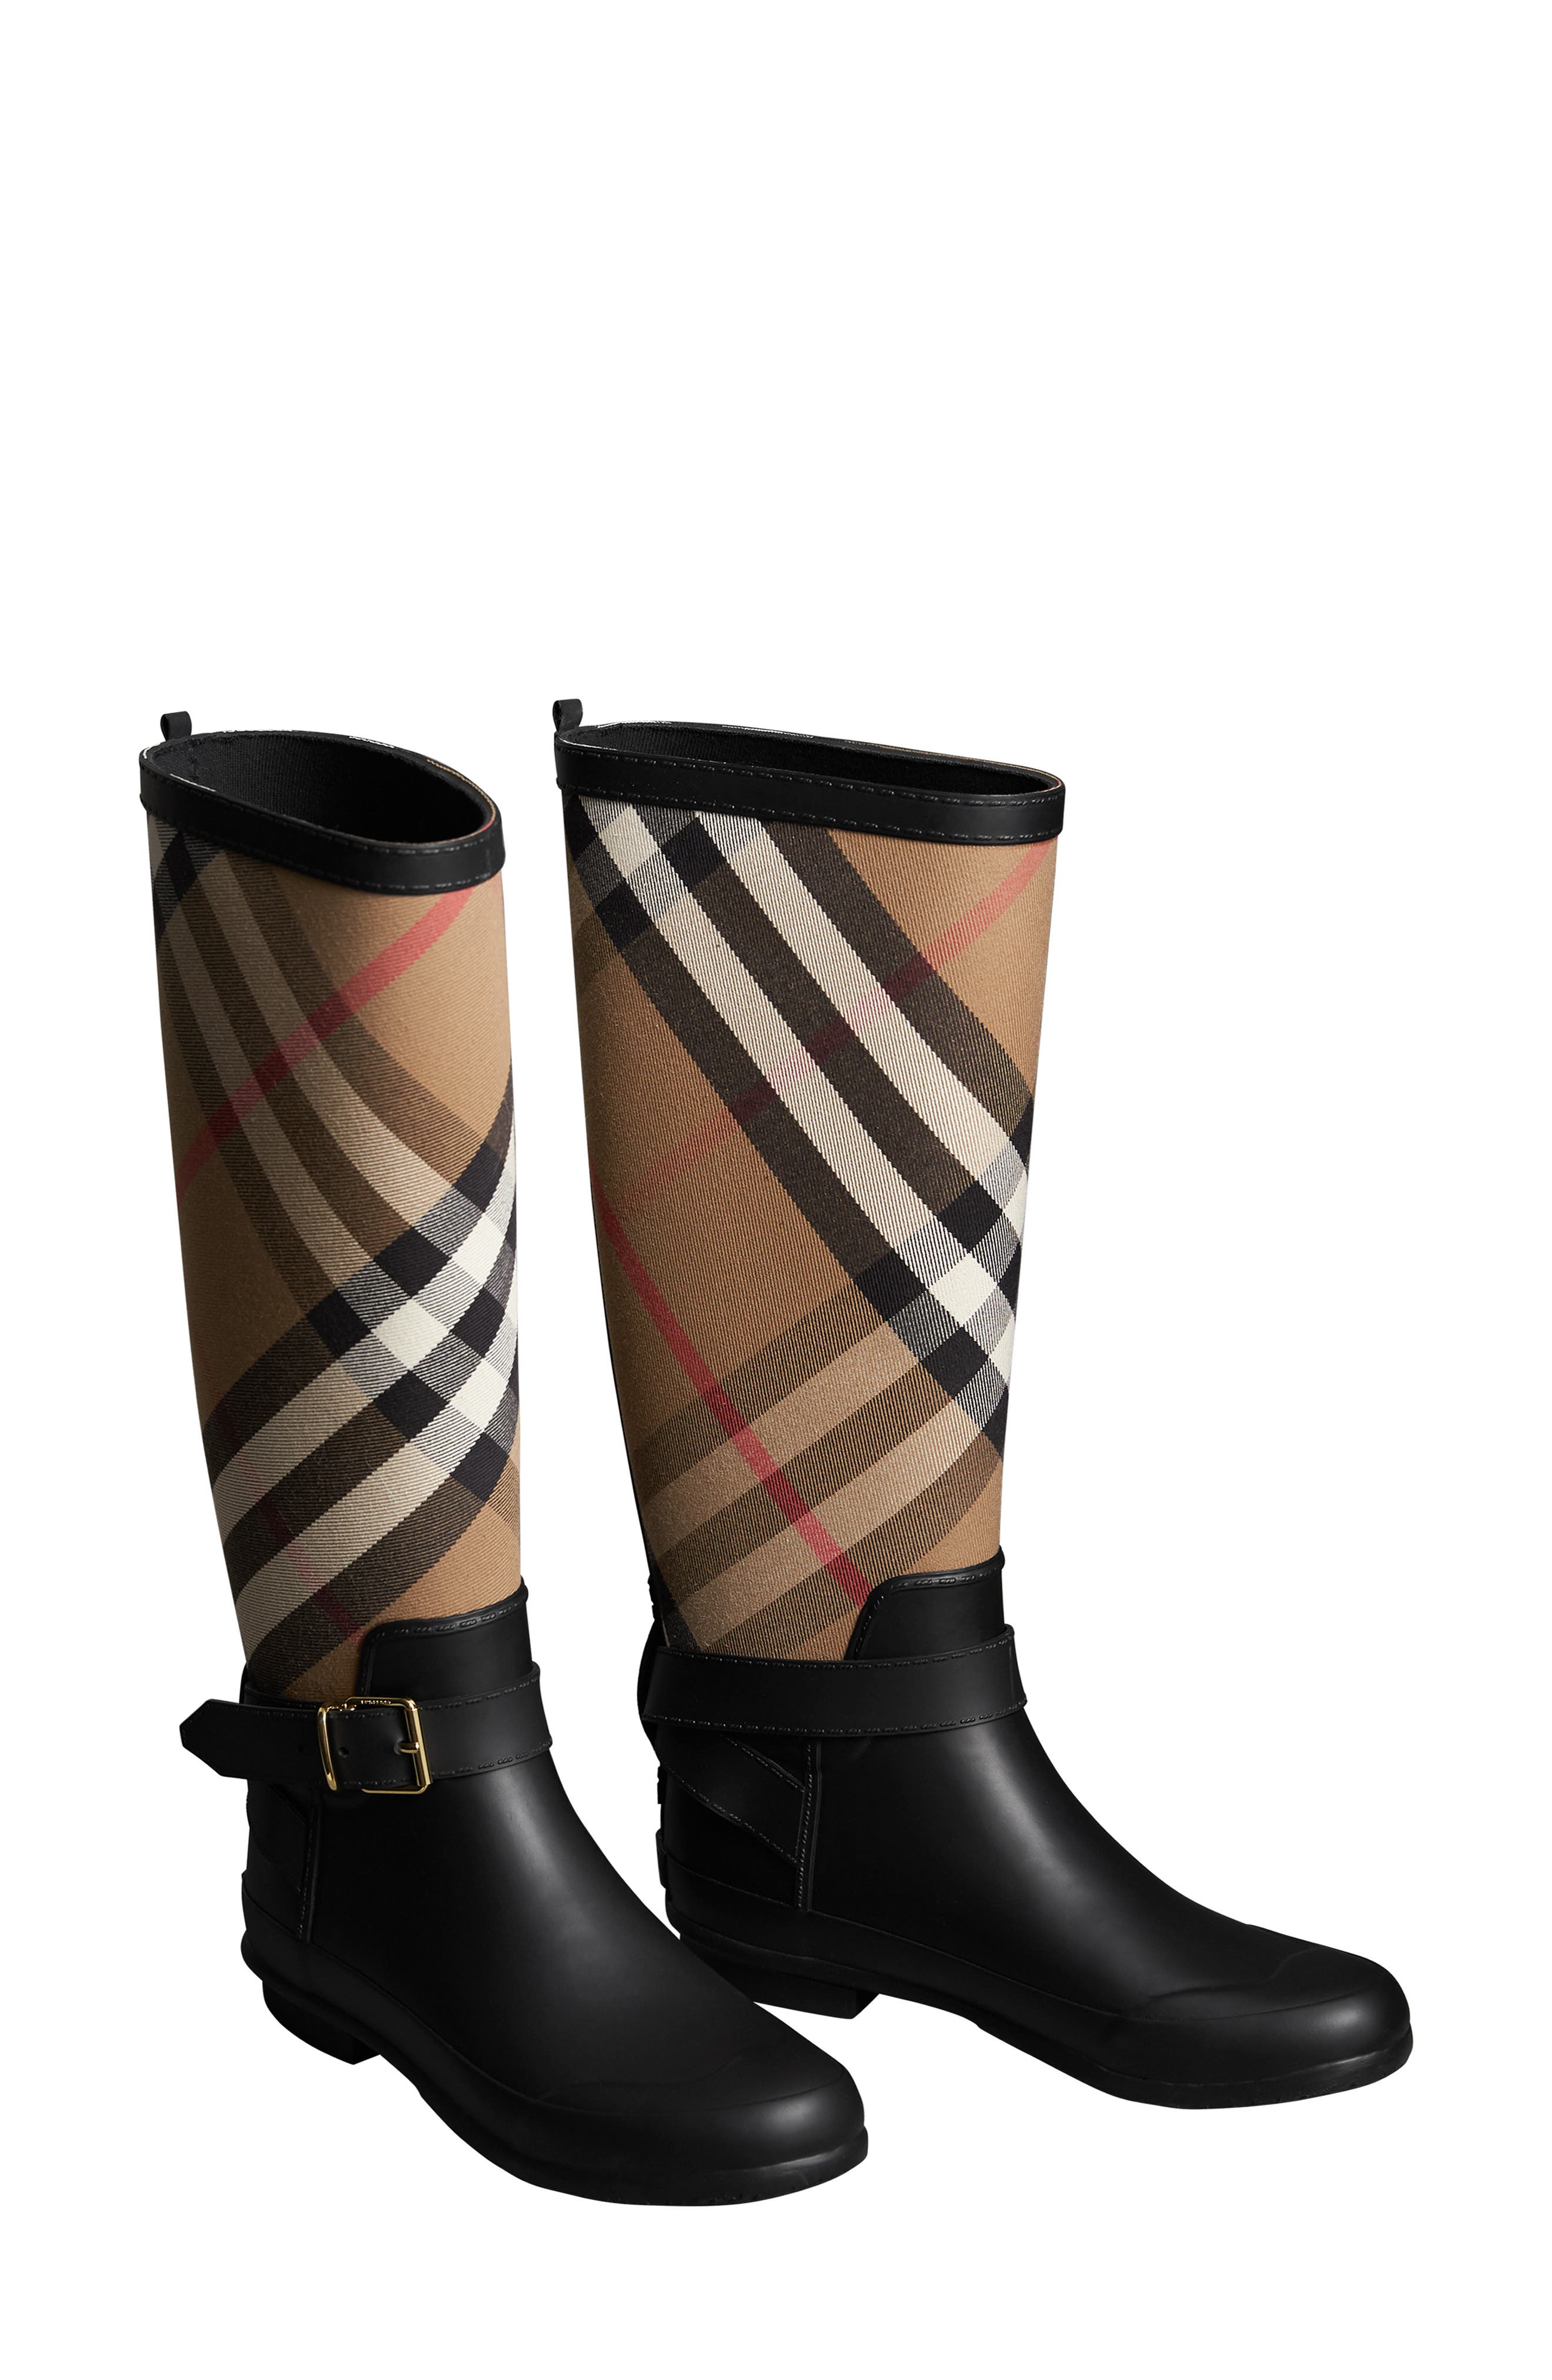 burberry rain boots price